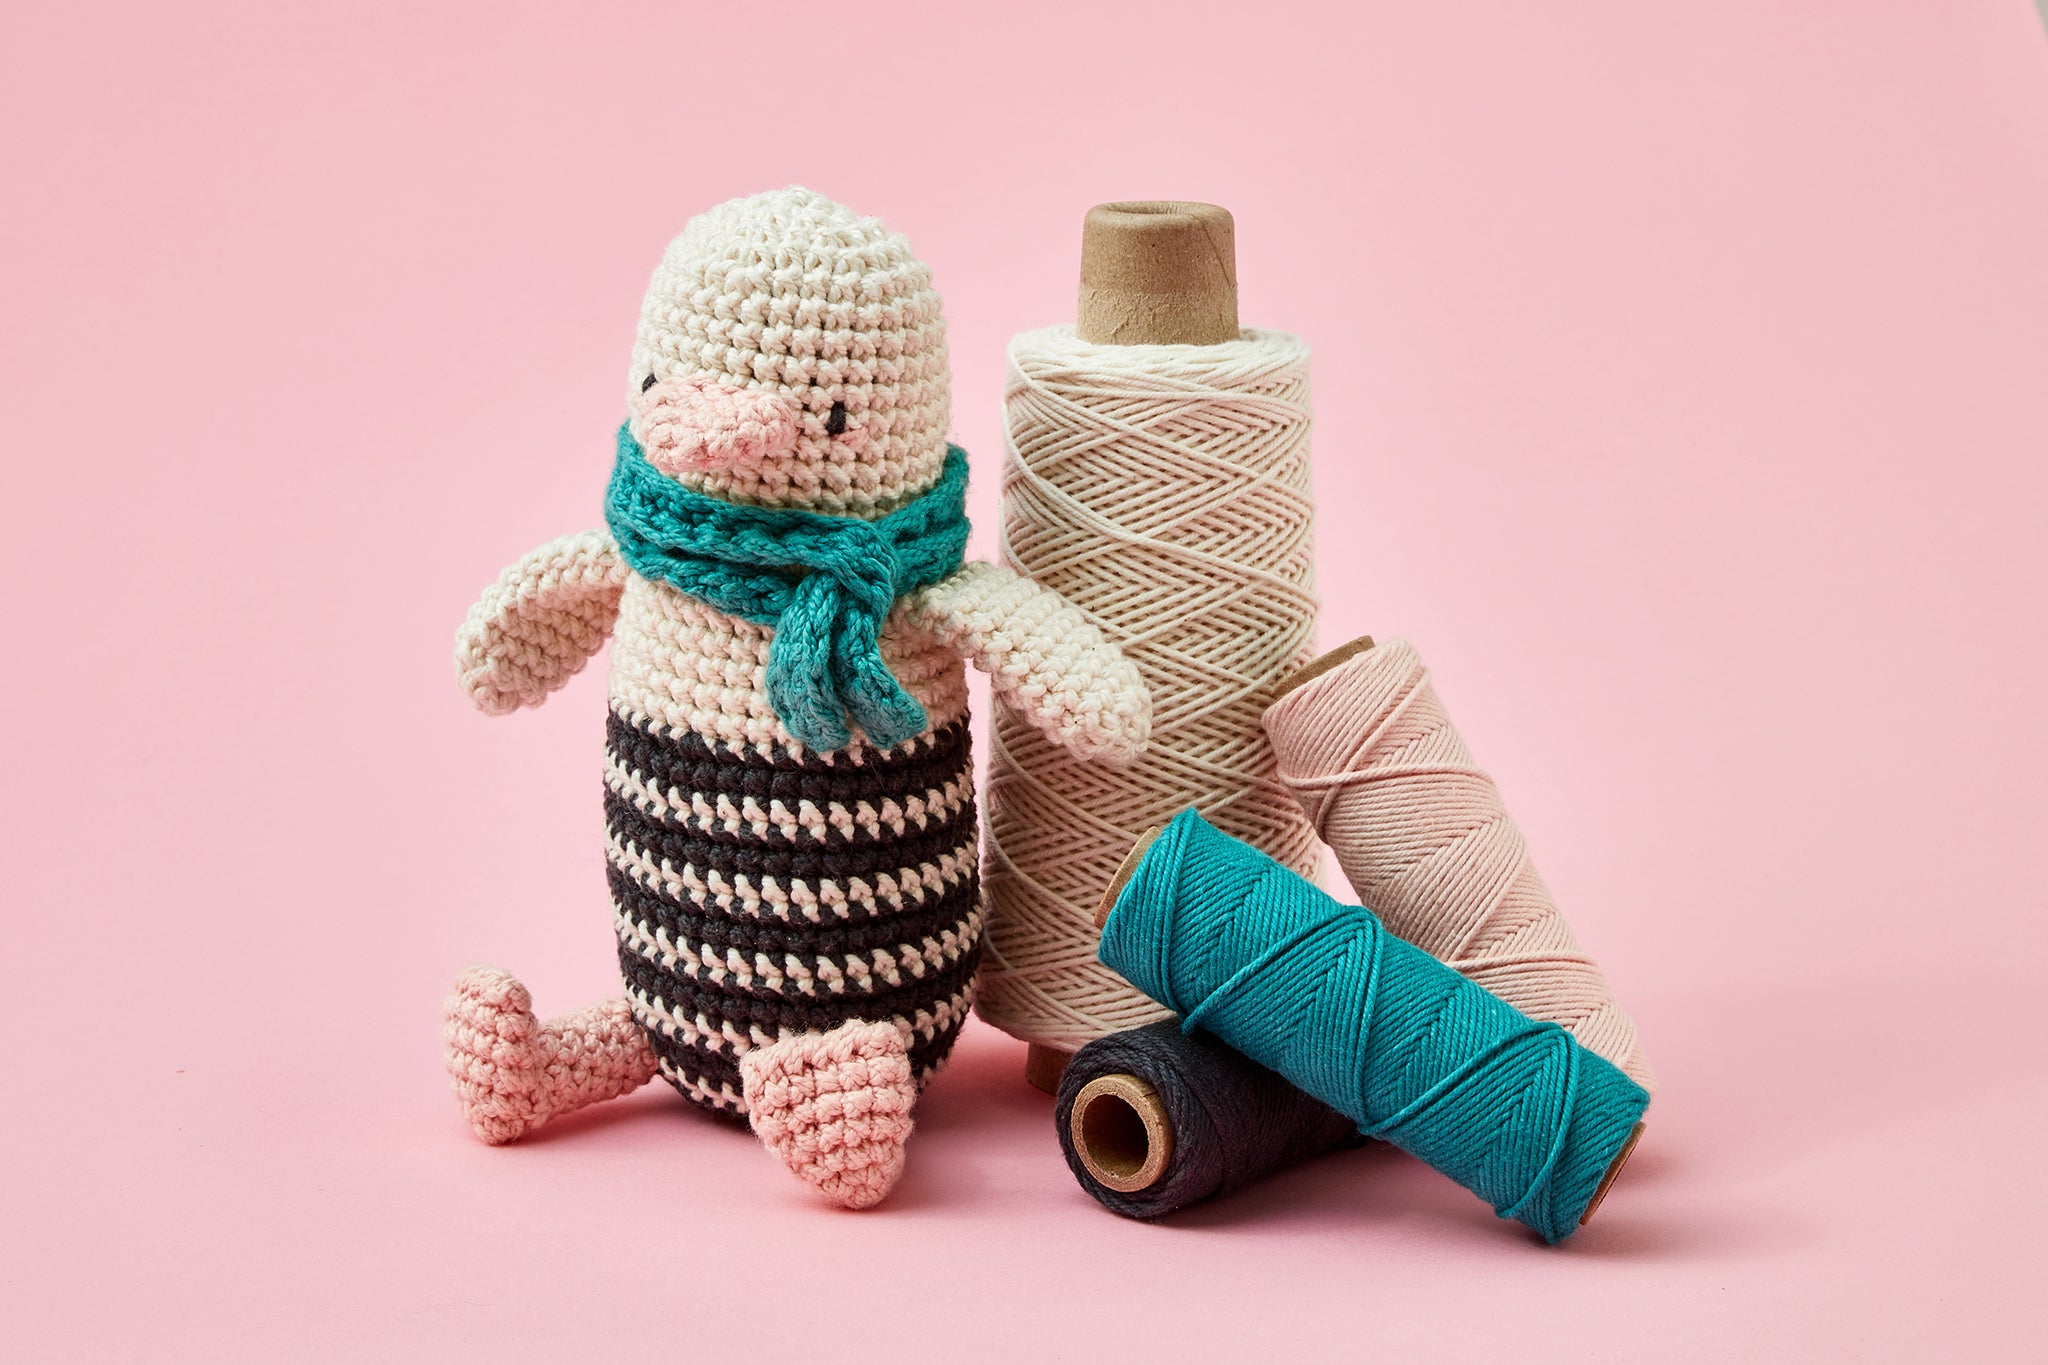 Beginner Amigurumi Crochet Kit by Yan Schenkel